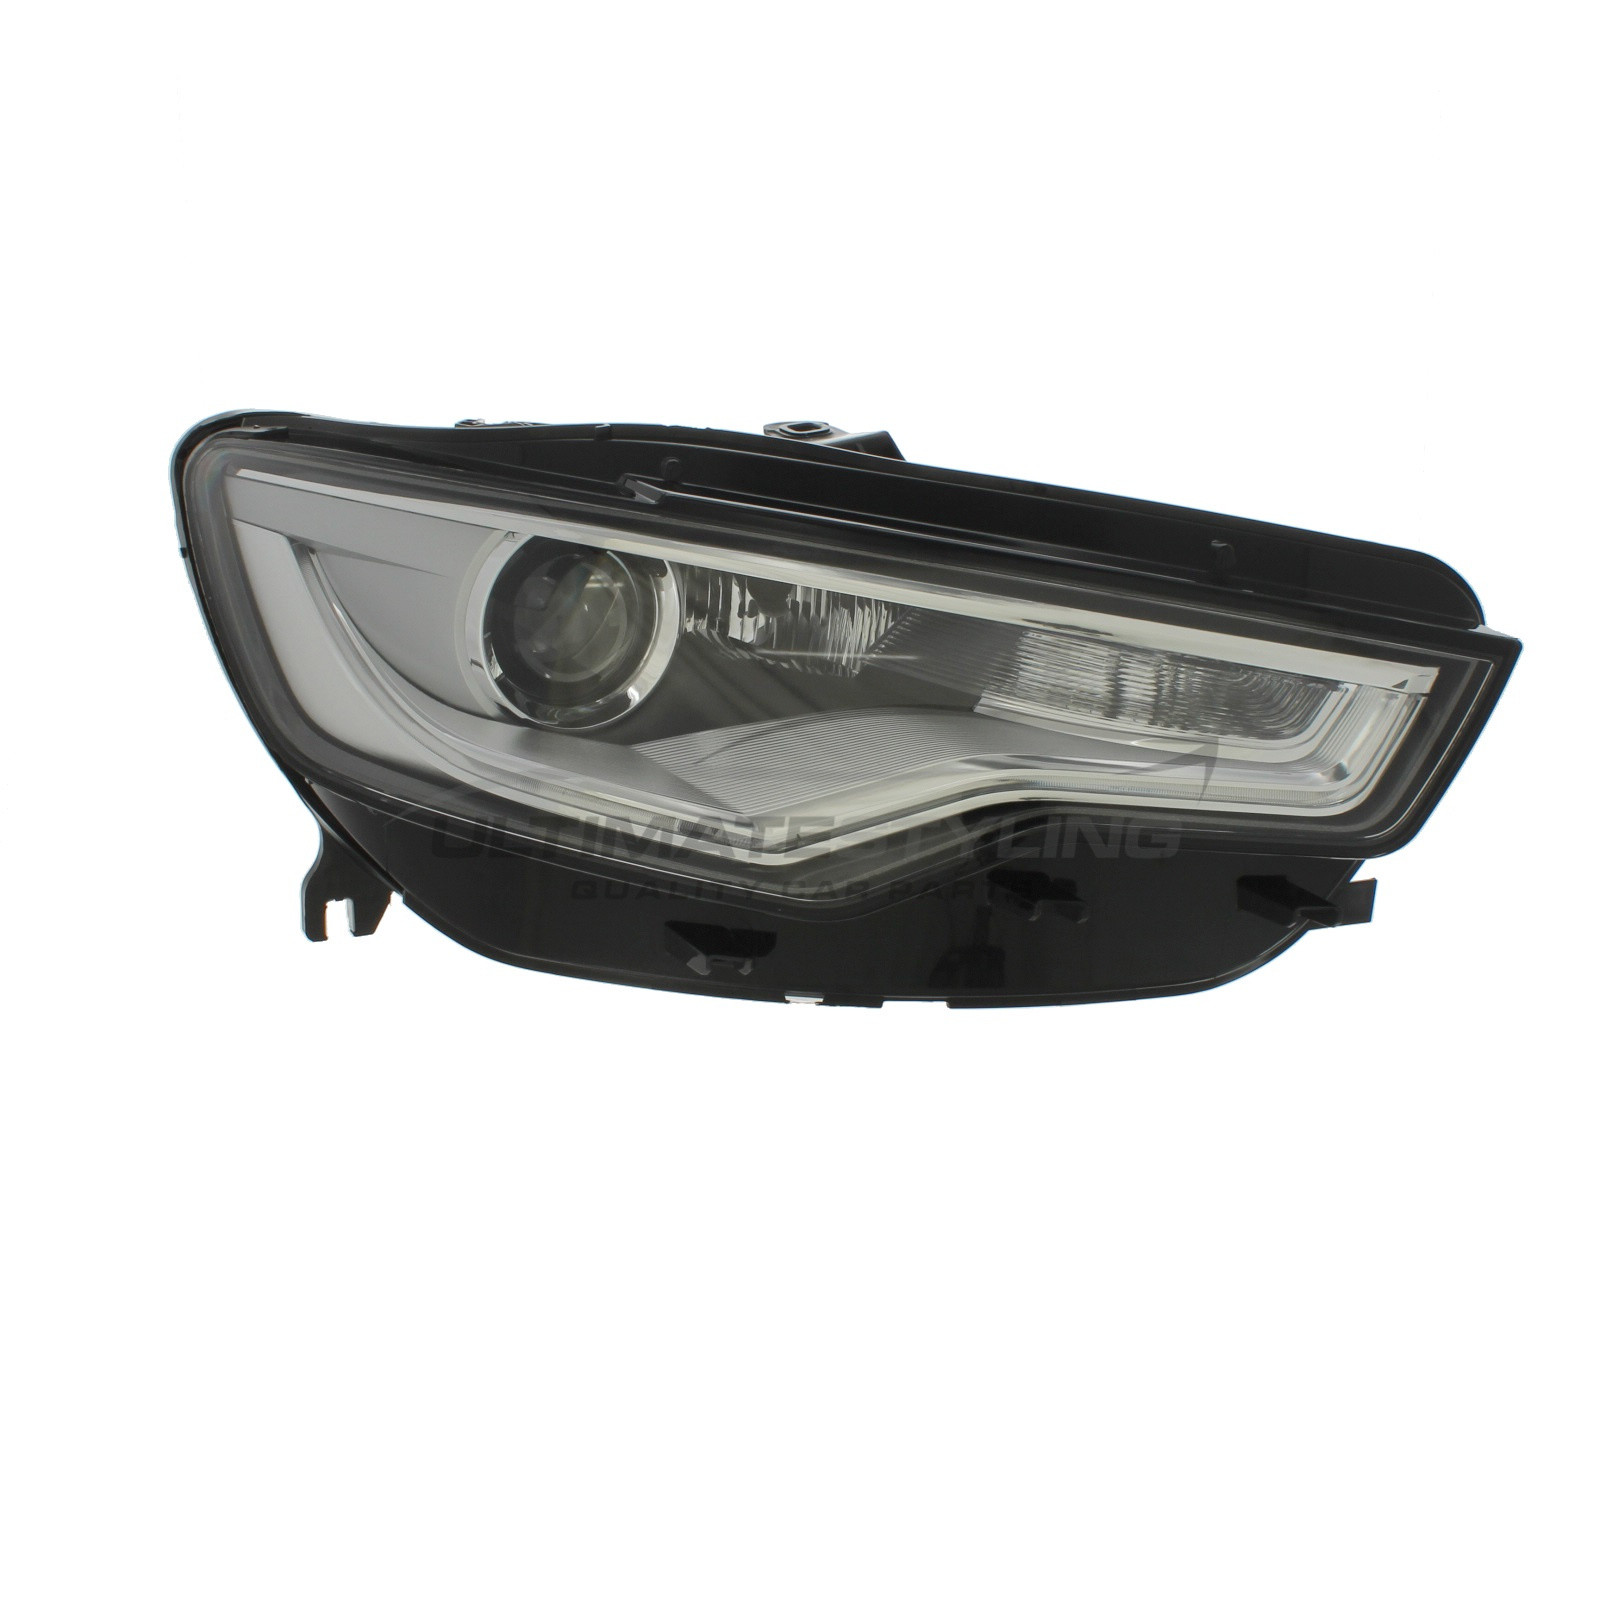 Headlight / Headlamp for Audi S6